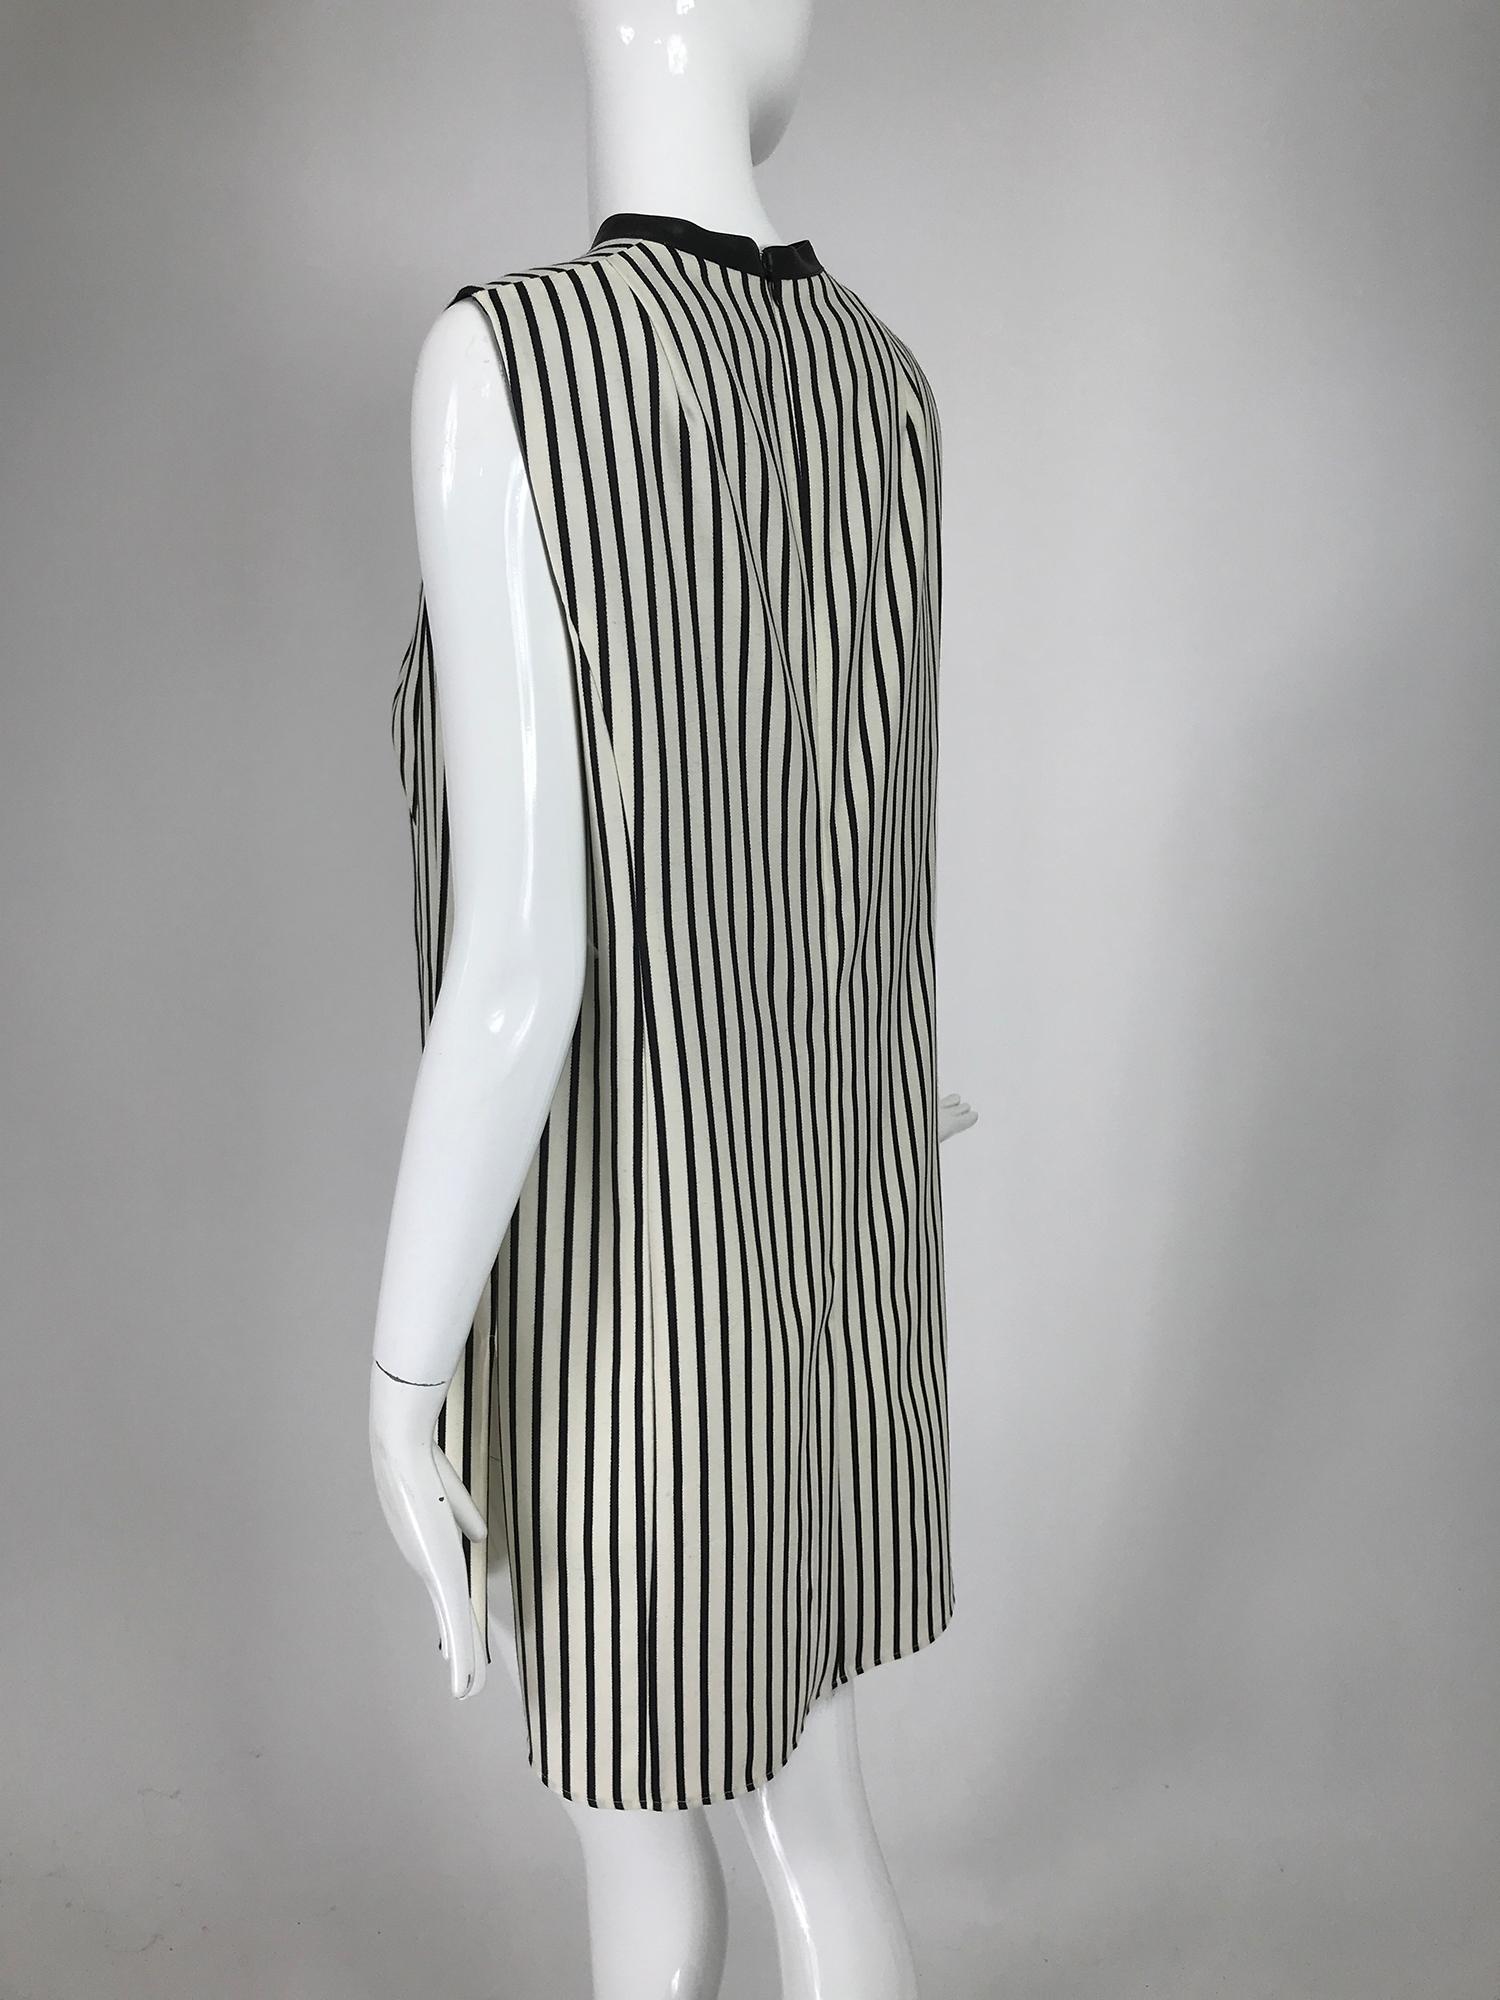 black and white striped tunic